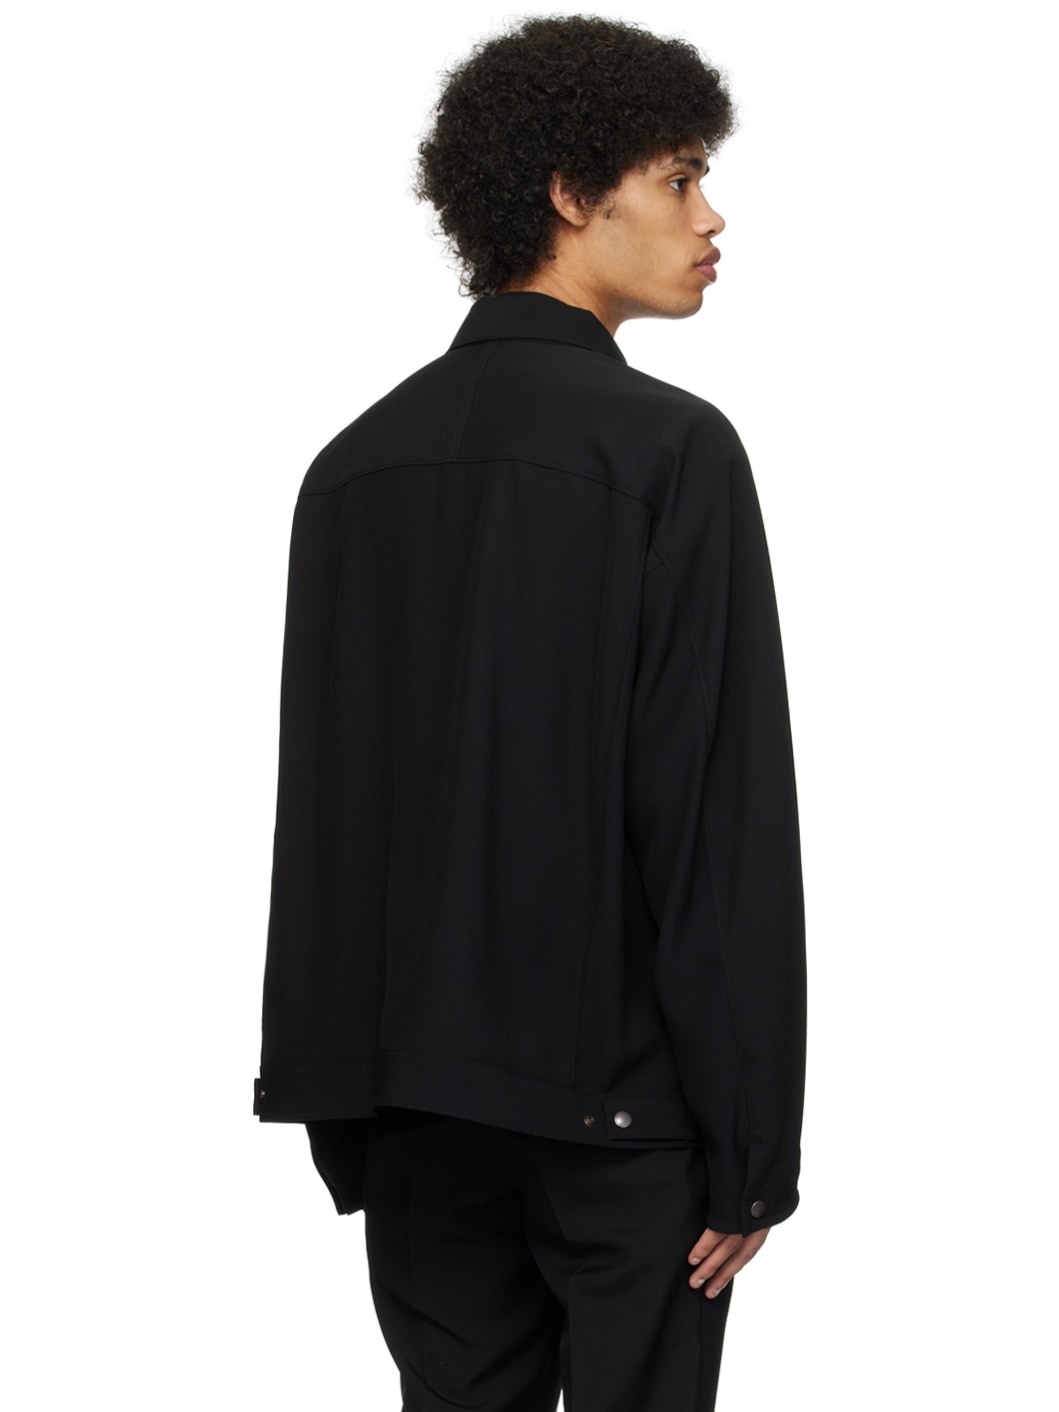 Black Buttoned Jacket - 3